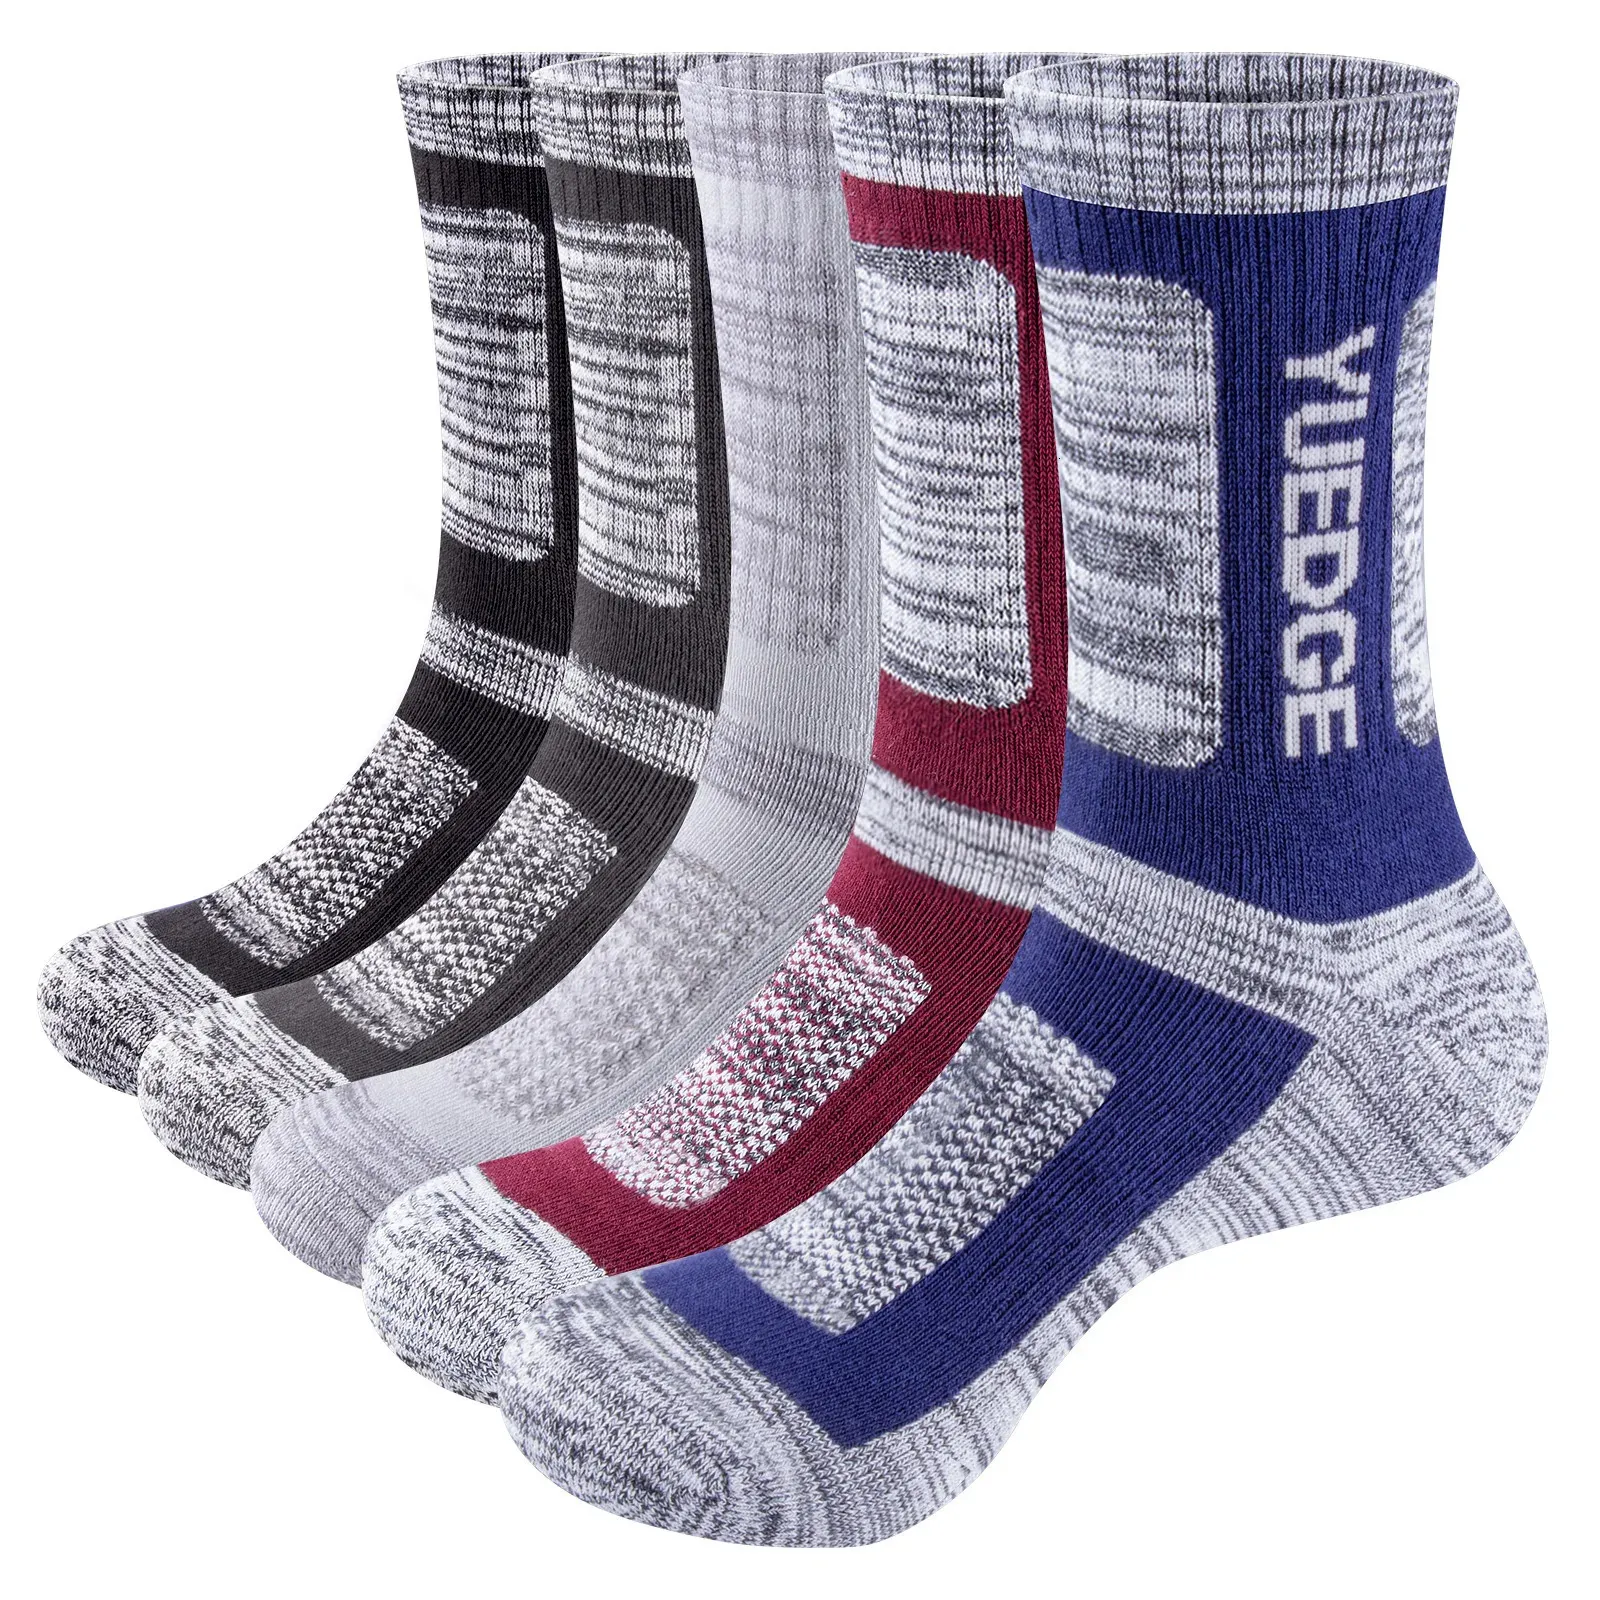 Sports Socks Yuedge Men Socks Breattable Cotton Cyned Crew Work Boot Sports Handing Athletic Socks Winter Thermal Socks 5 Par 37- EU 231201